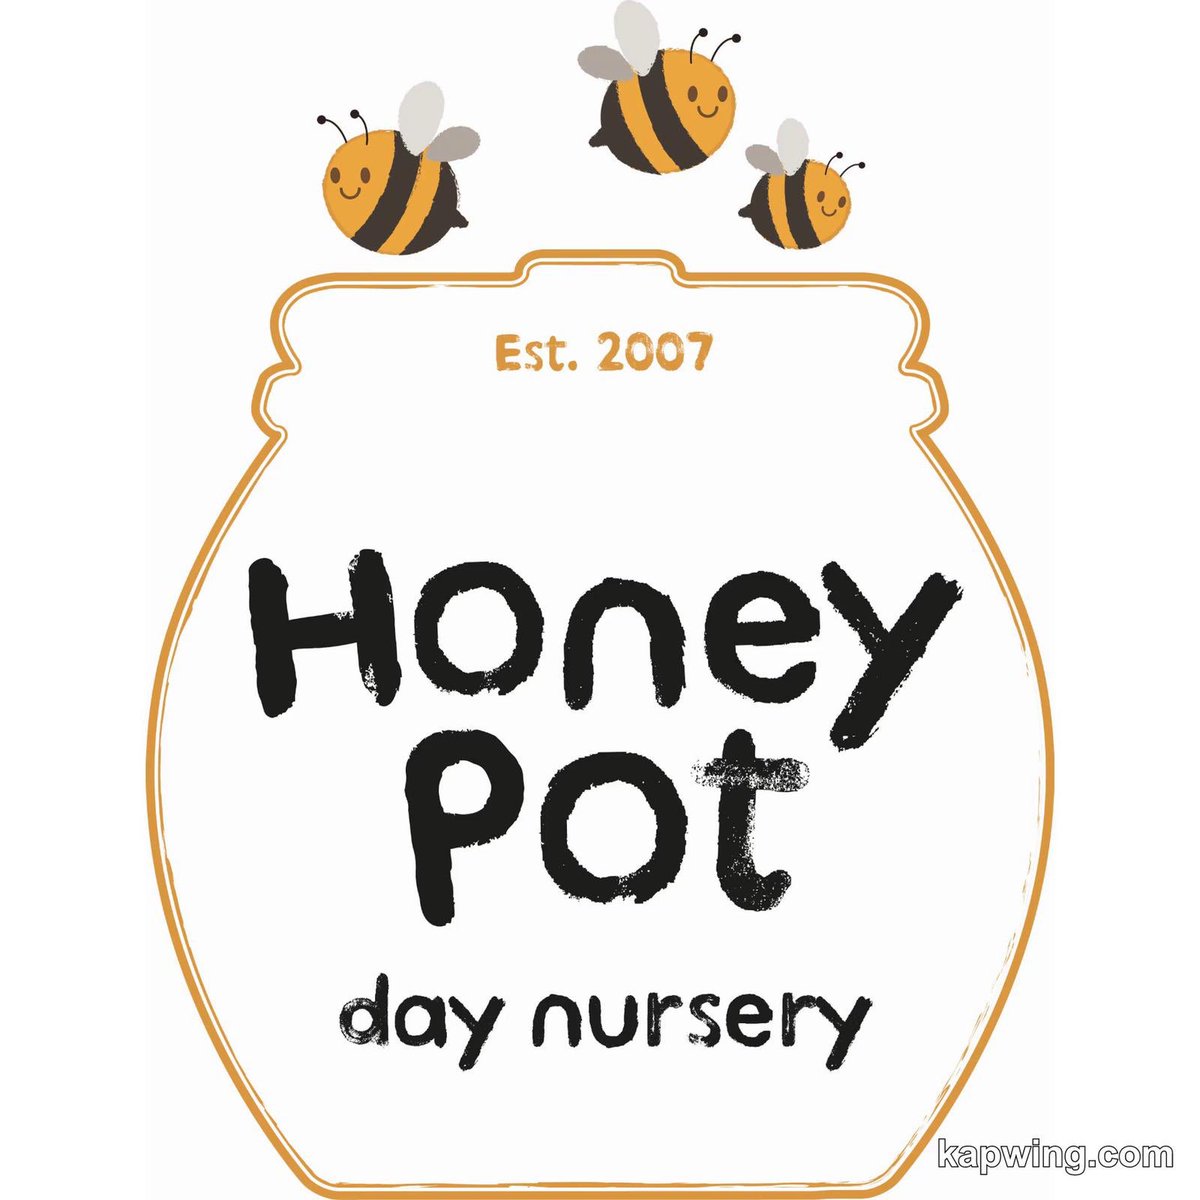 Ms honey pot